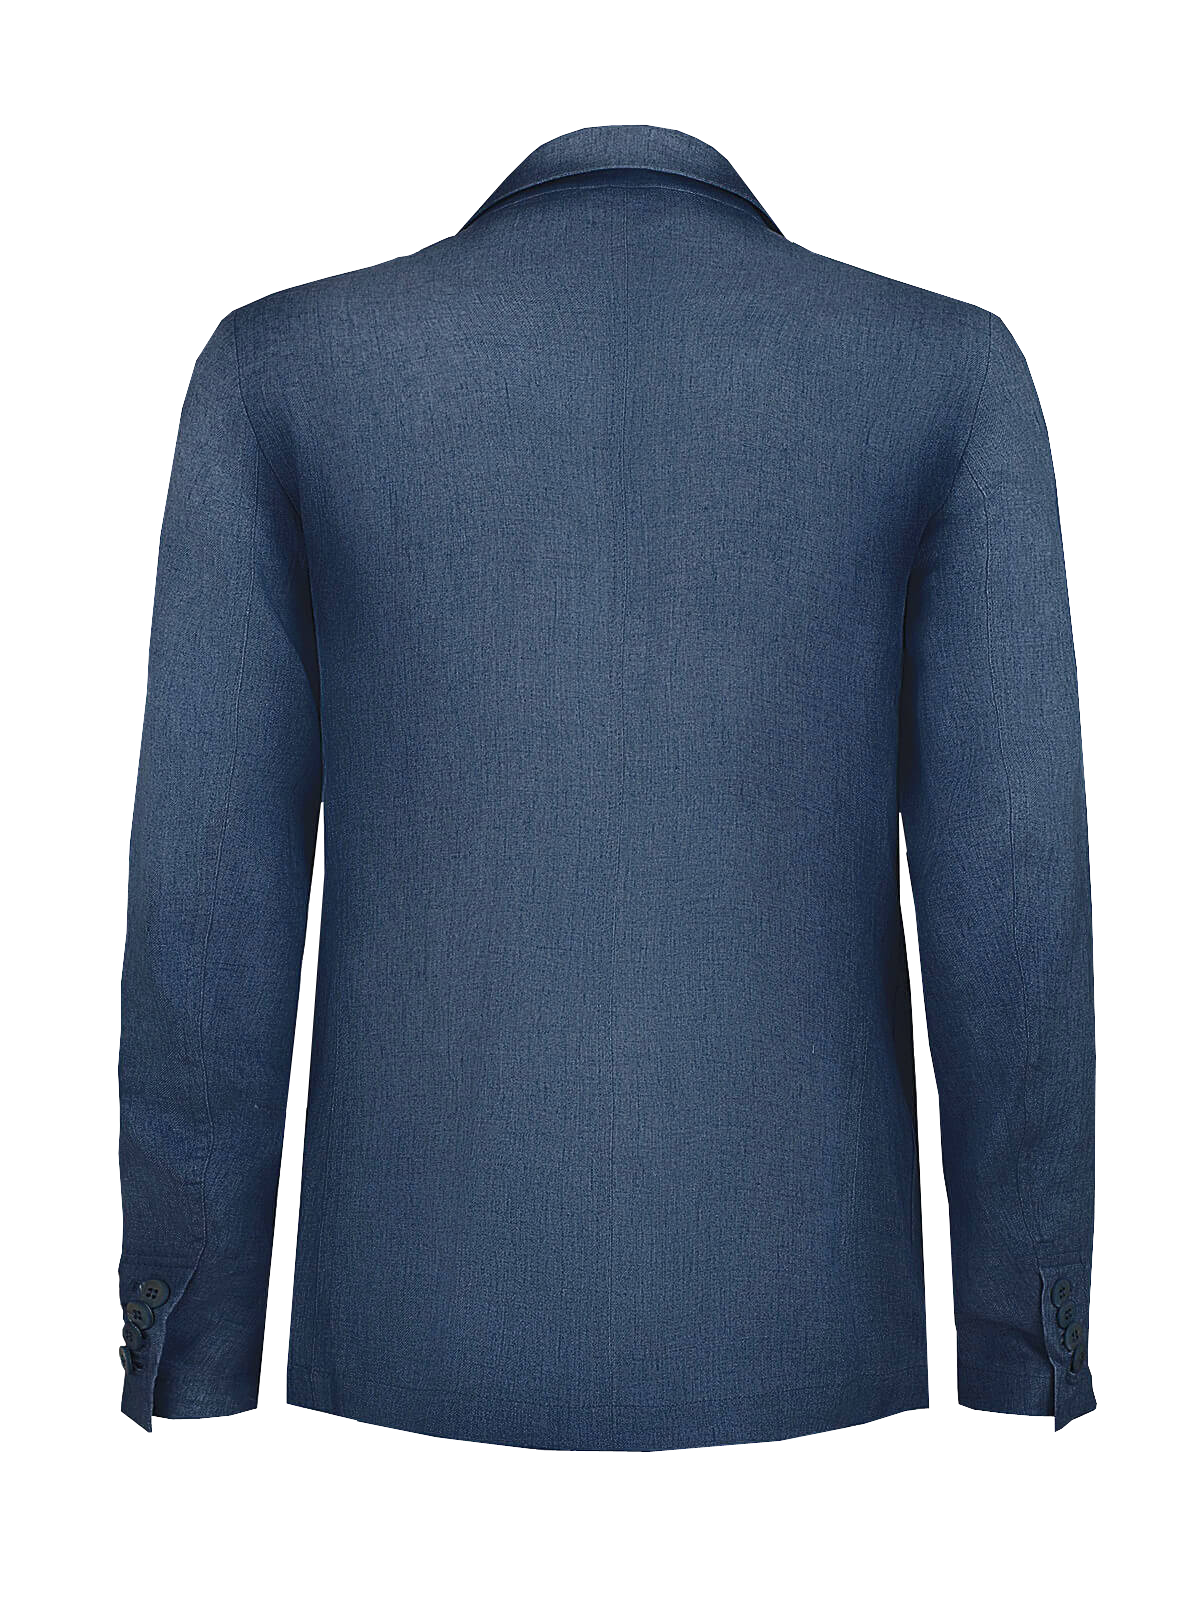 Giacca St. Tropez 100% Capri blue linen jacket for man  back